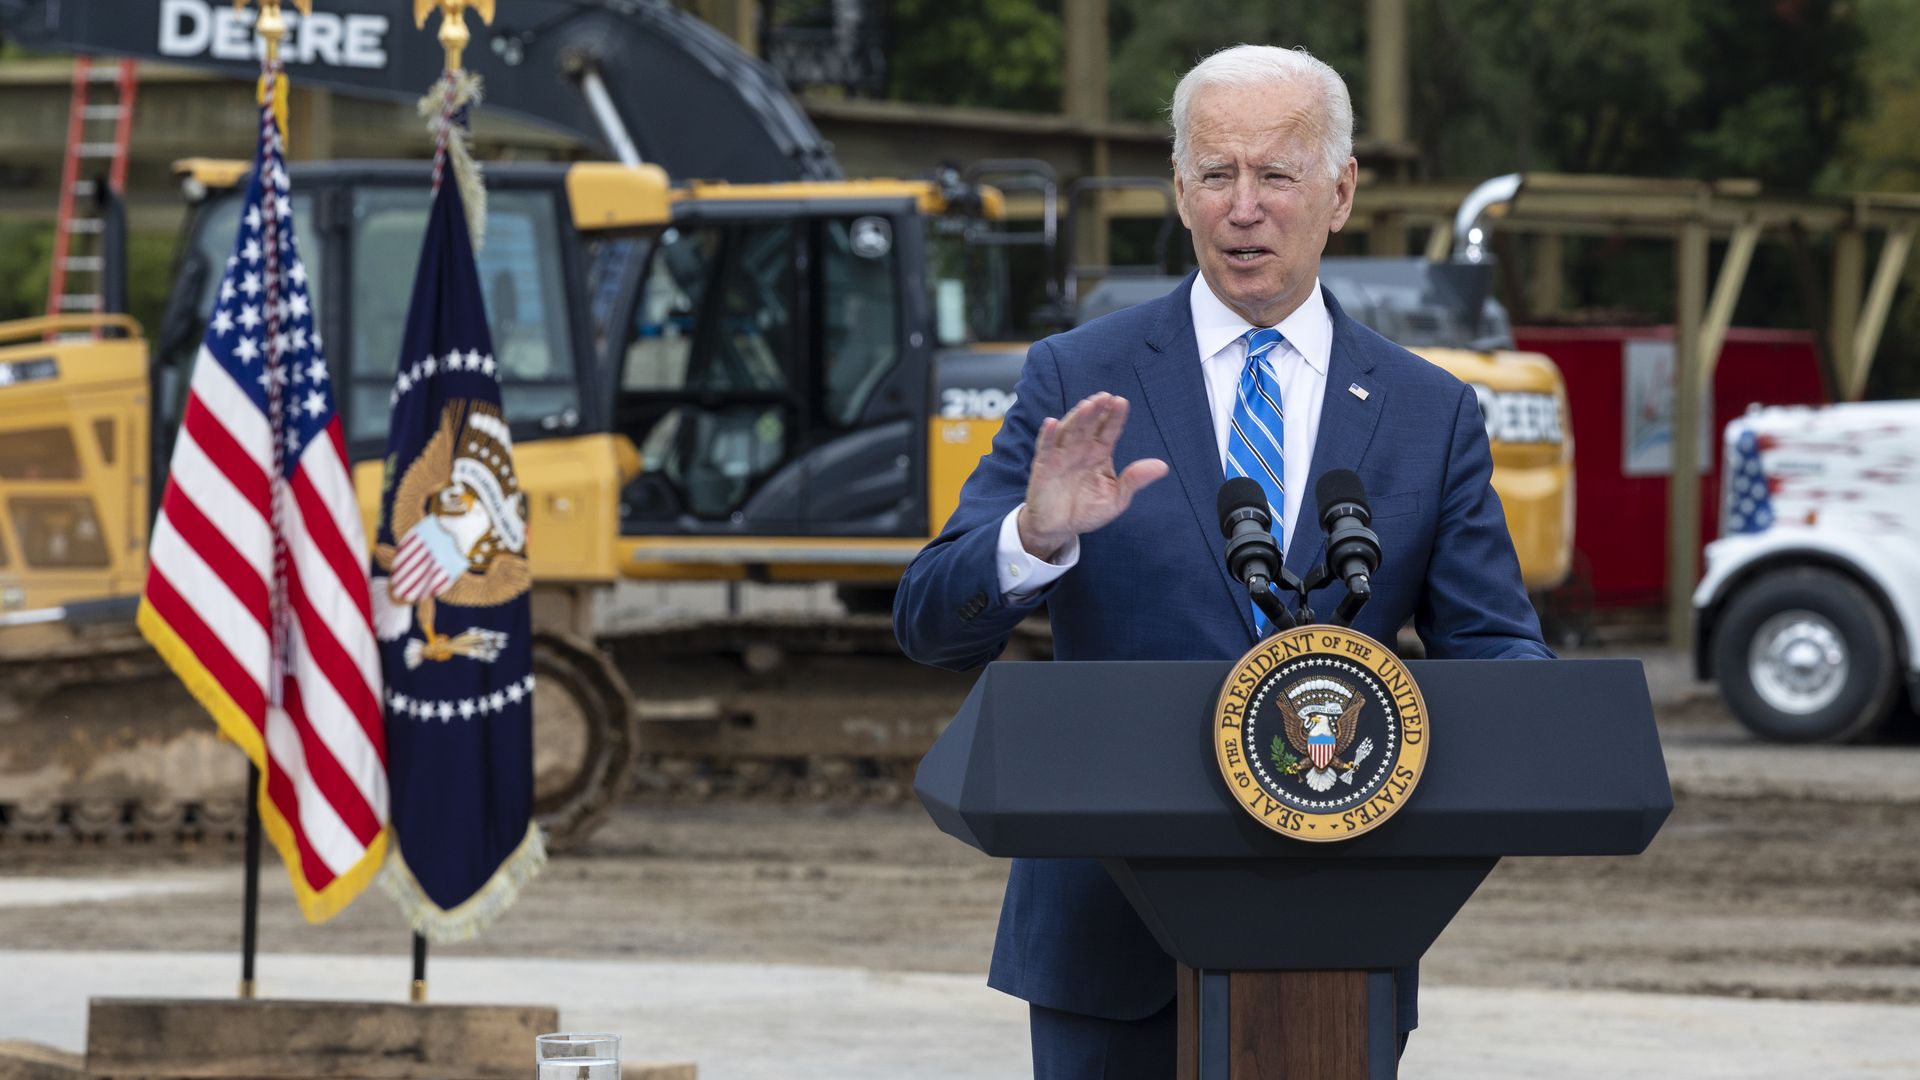  President Joe Biden speaks at the International Union of Operating Engineers Local 324 on October 5